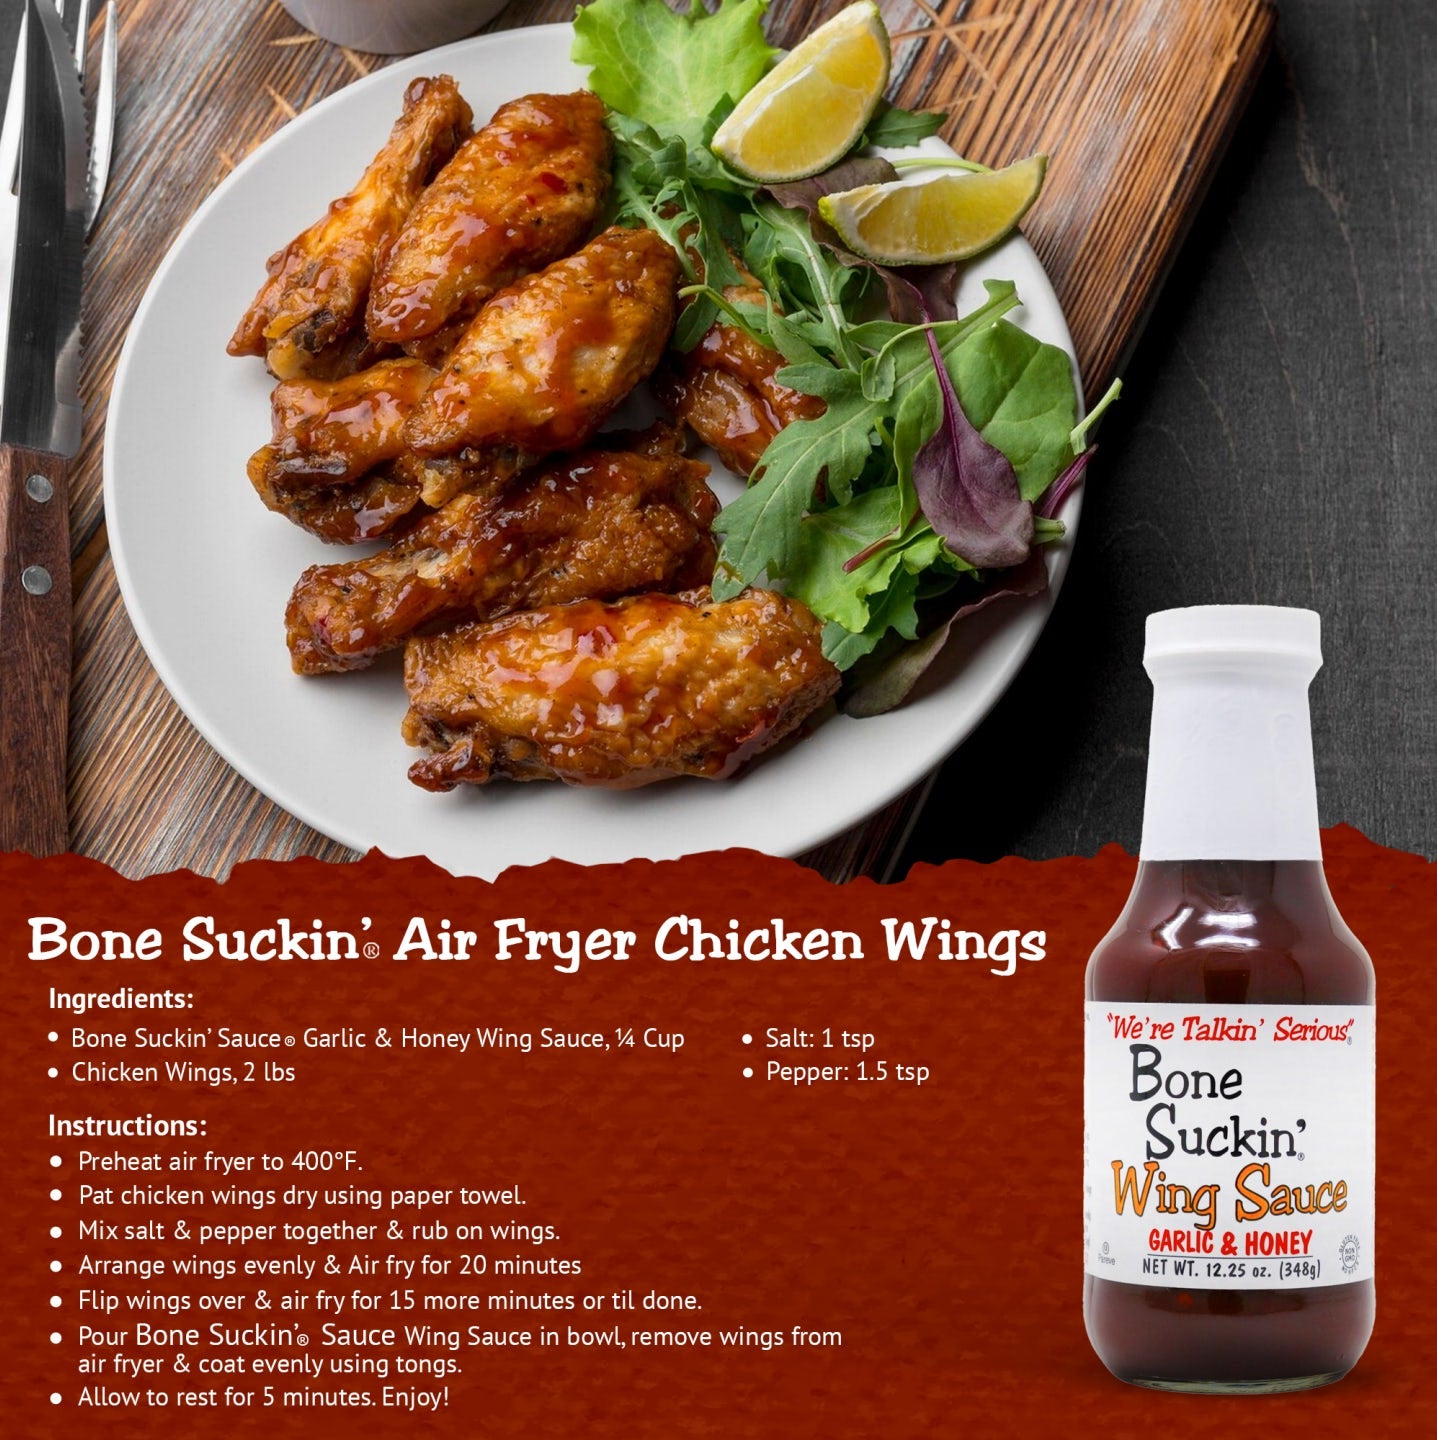 Bone Suckin' Wing Sauce Variety 3-Pack : Garlic & Honey, Teriyaki & Ginger, Honey & Habanero - For Turkey & Chicken Wings, Ribs, Seafood, Pork, Beef - Gluten Free, Non Gmo, Kosher In Glass Bottles, 3 Pc